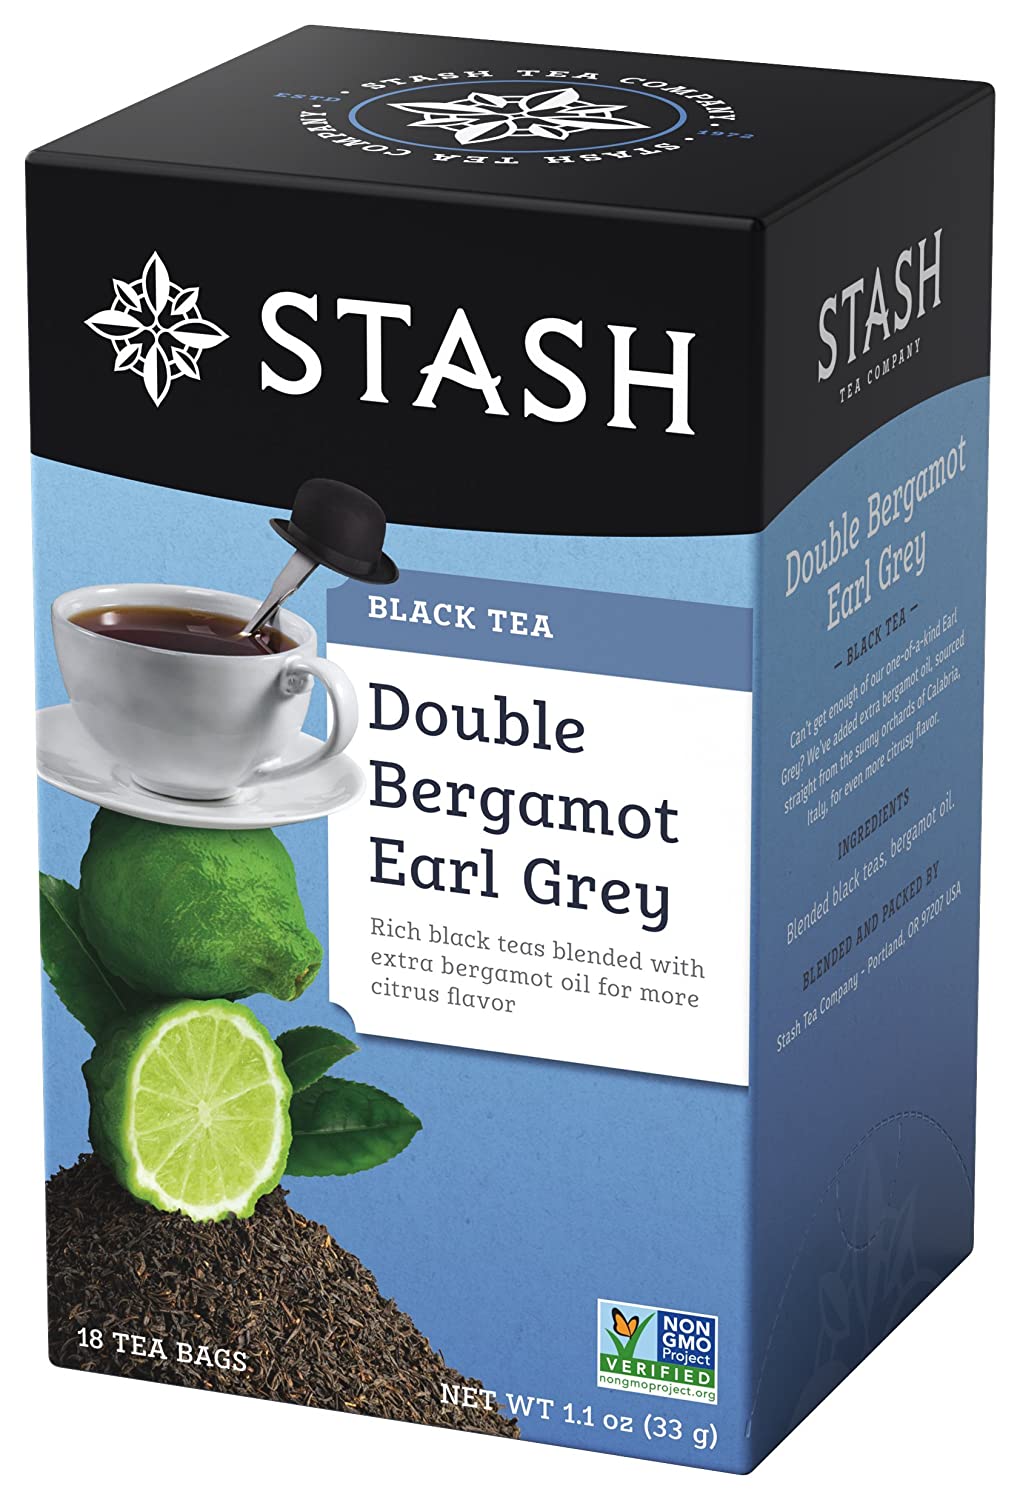 Stash Tea Double Bergamont Earl Grey Black Tea Bags - 18 Count